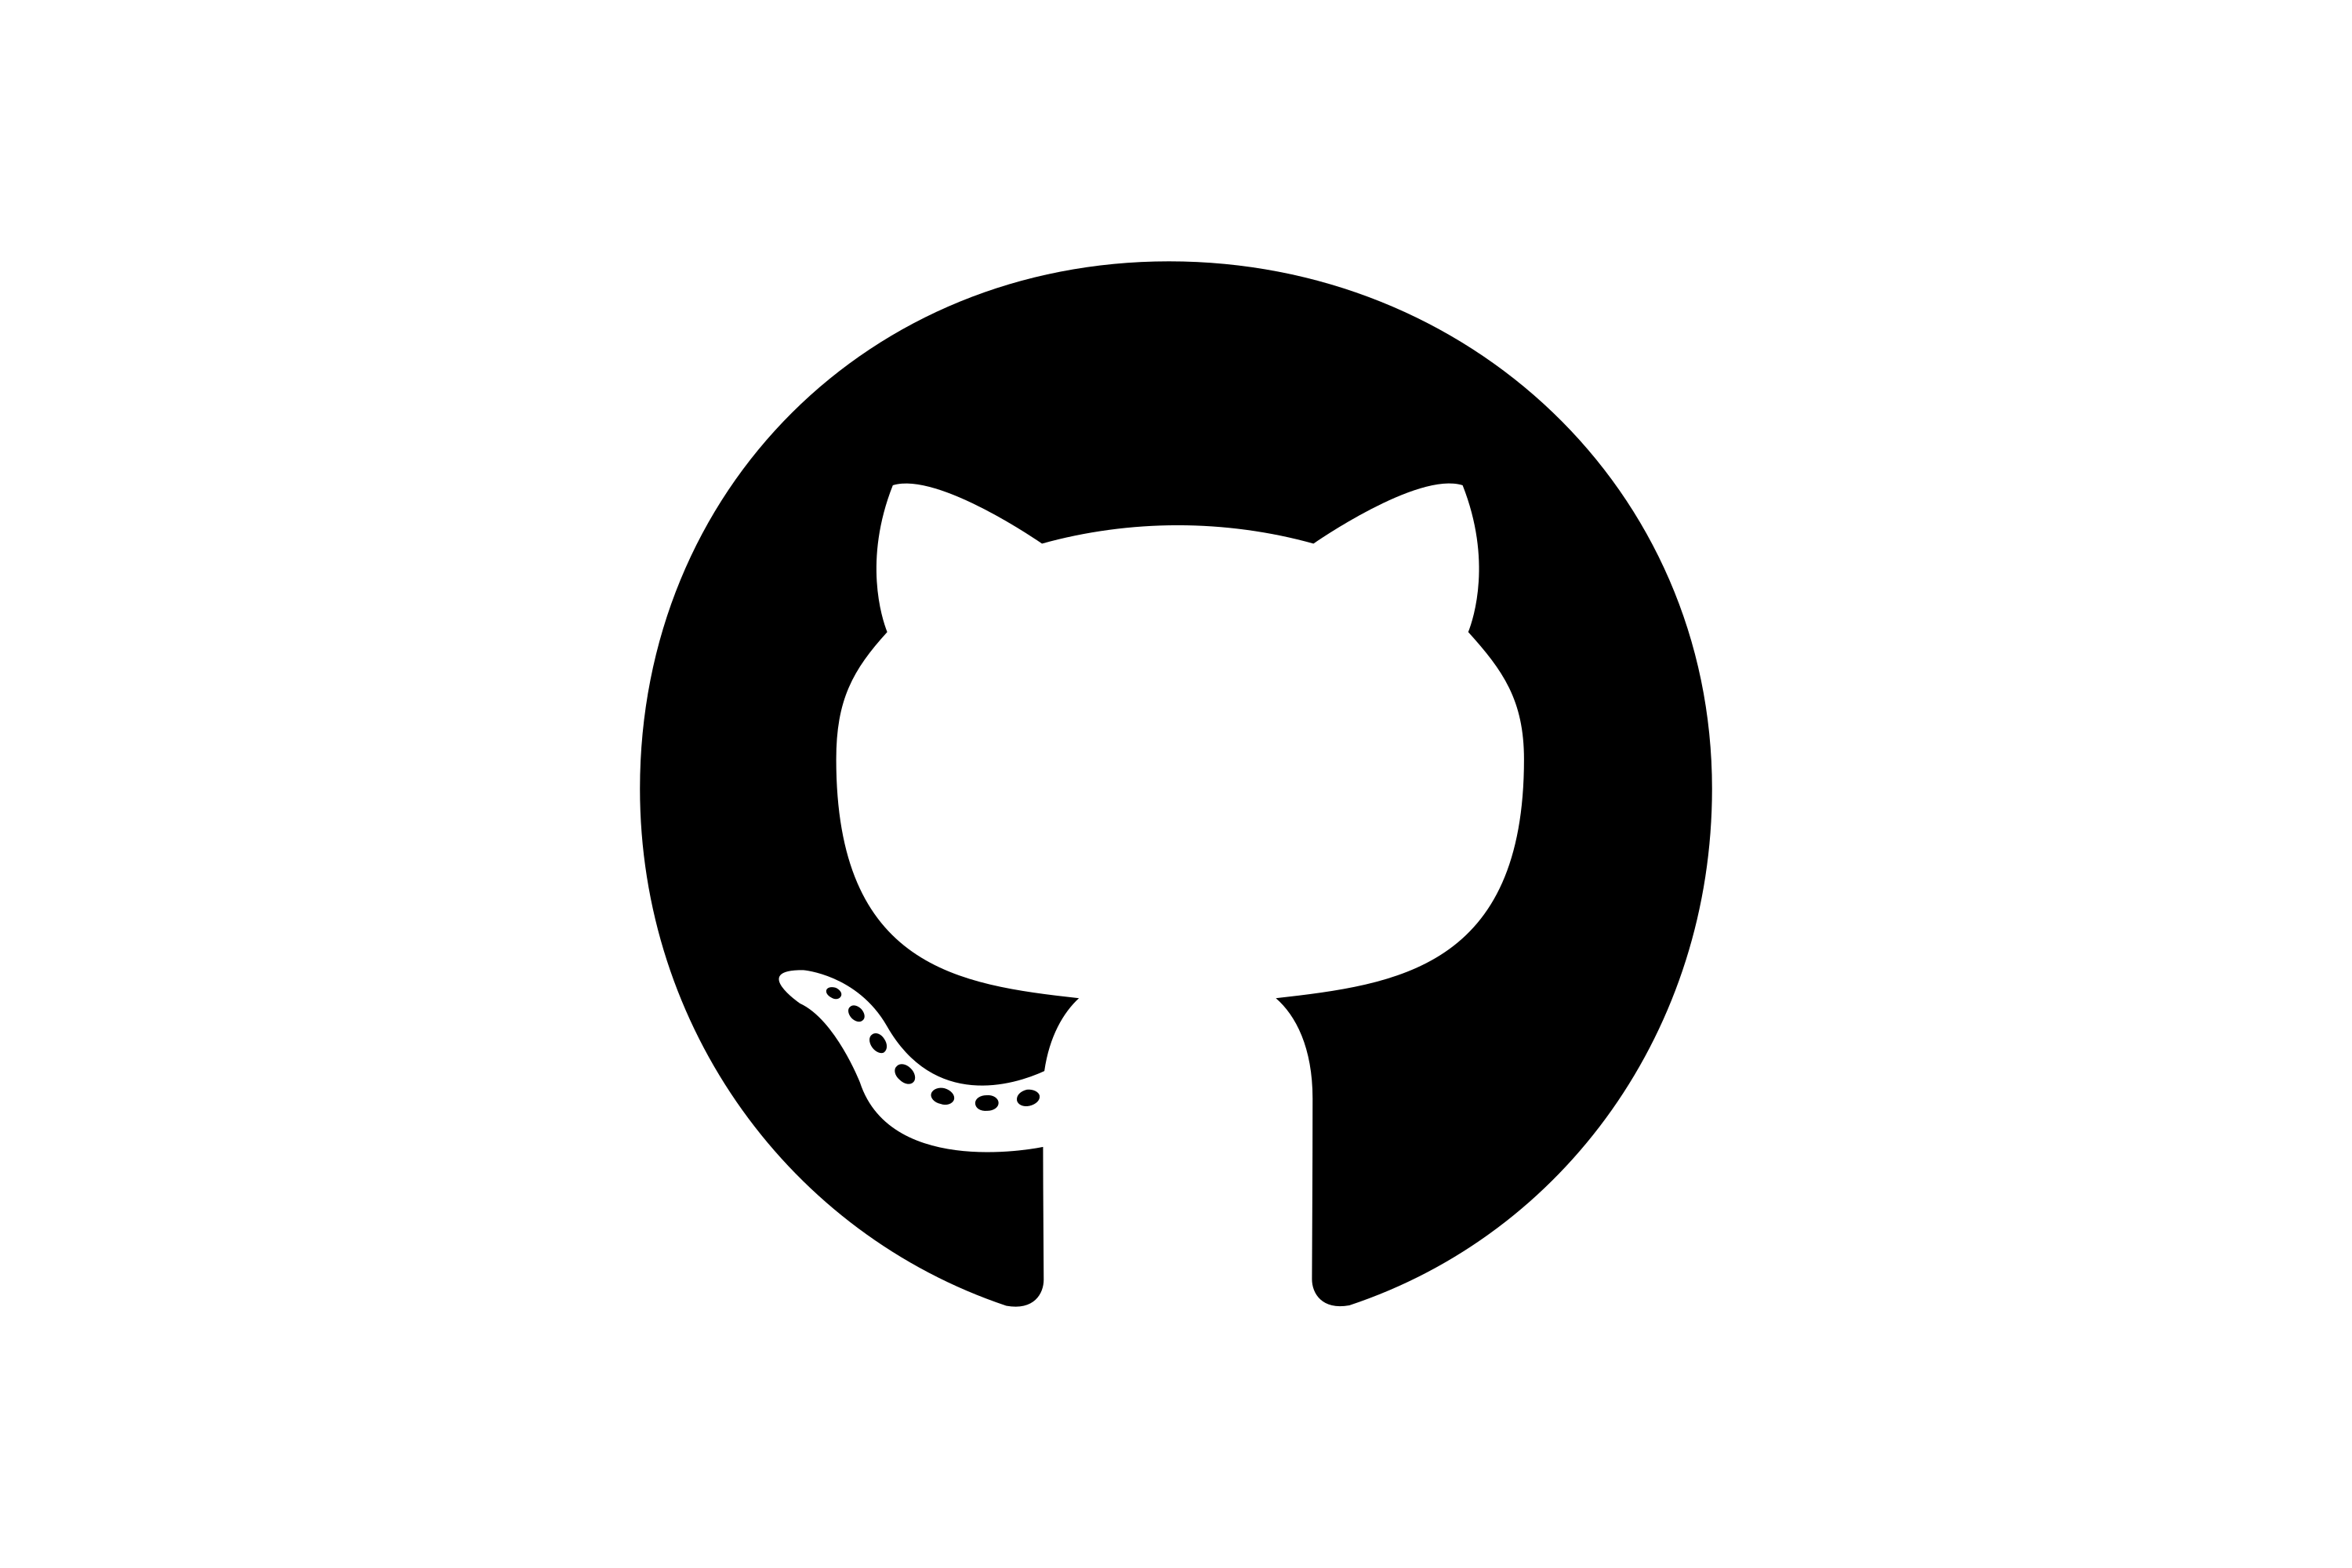 Download GitHub Logo in SVG Vector or PNG File Format ...